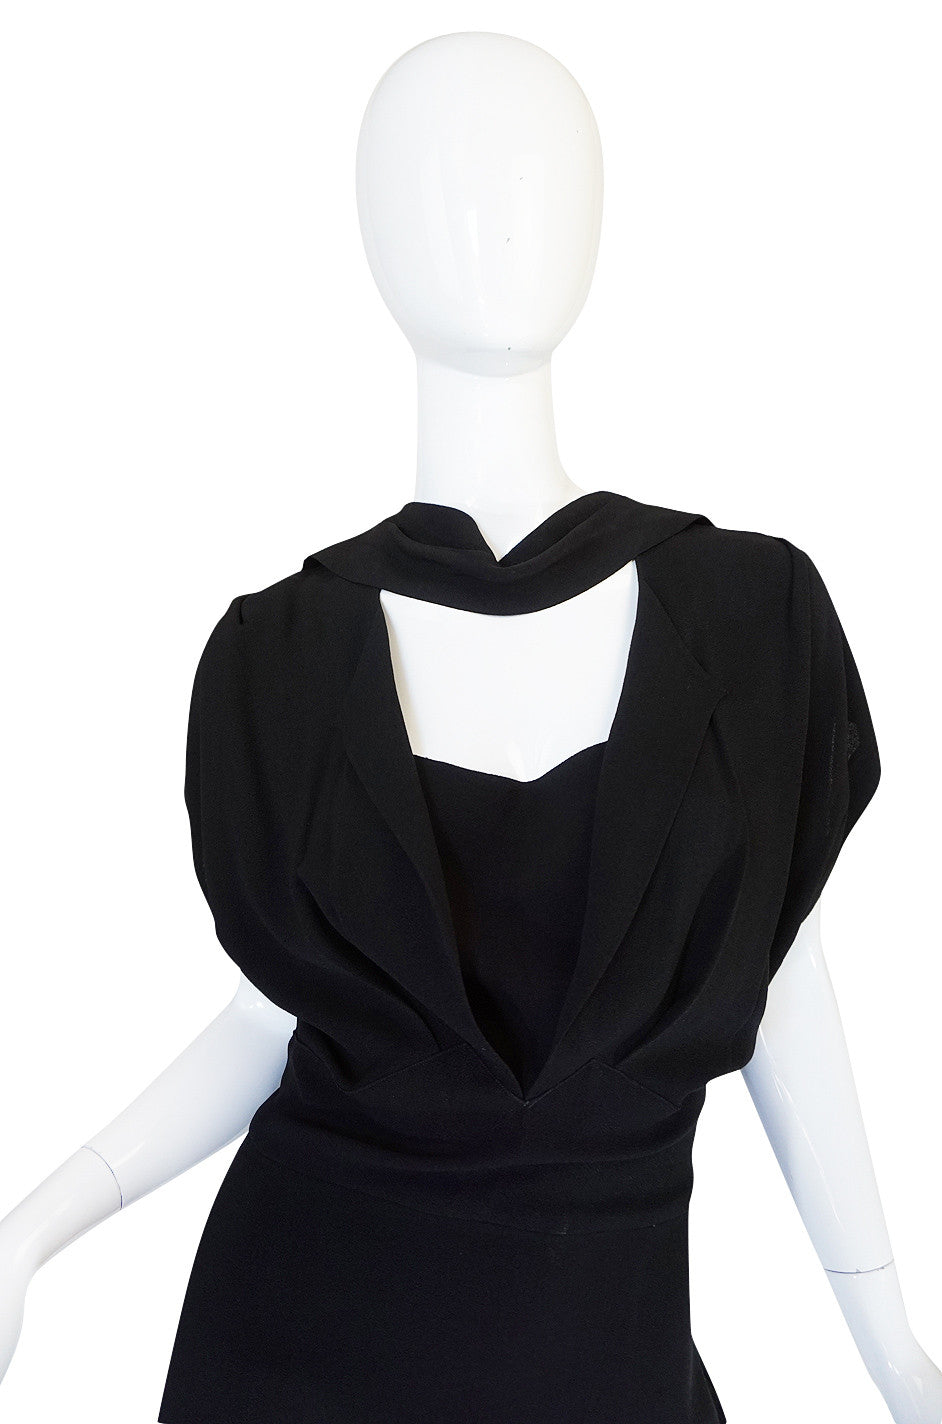 Dramatic 1940s Adrian Original Black Crepe Swing Dress – Shrimpton Couture